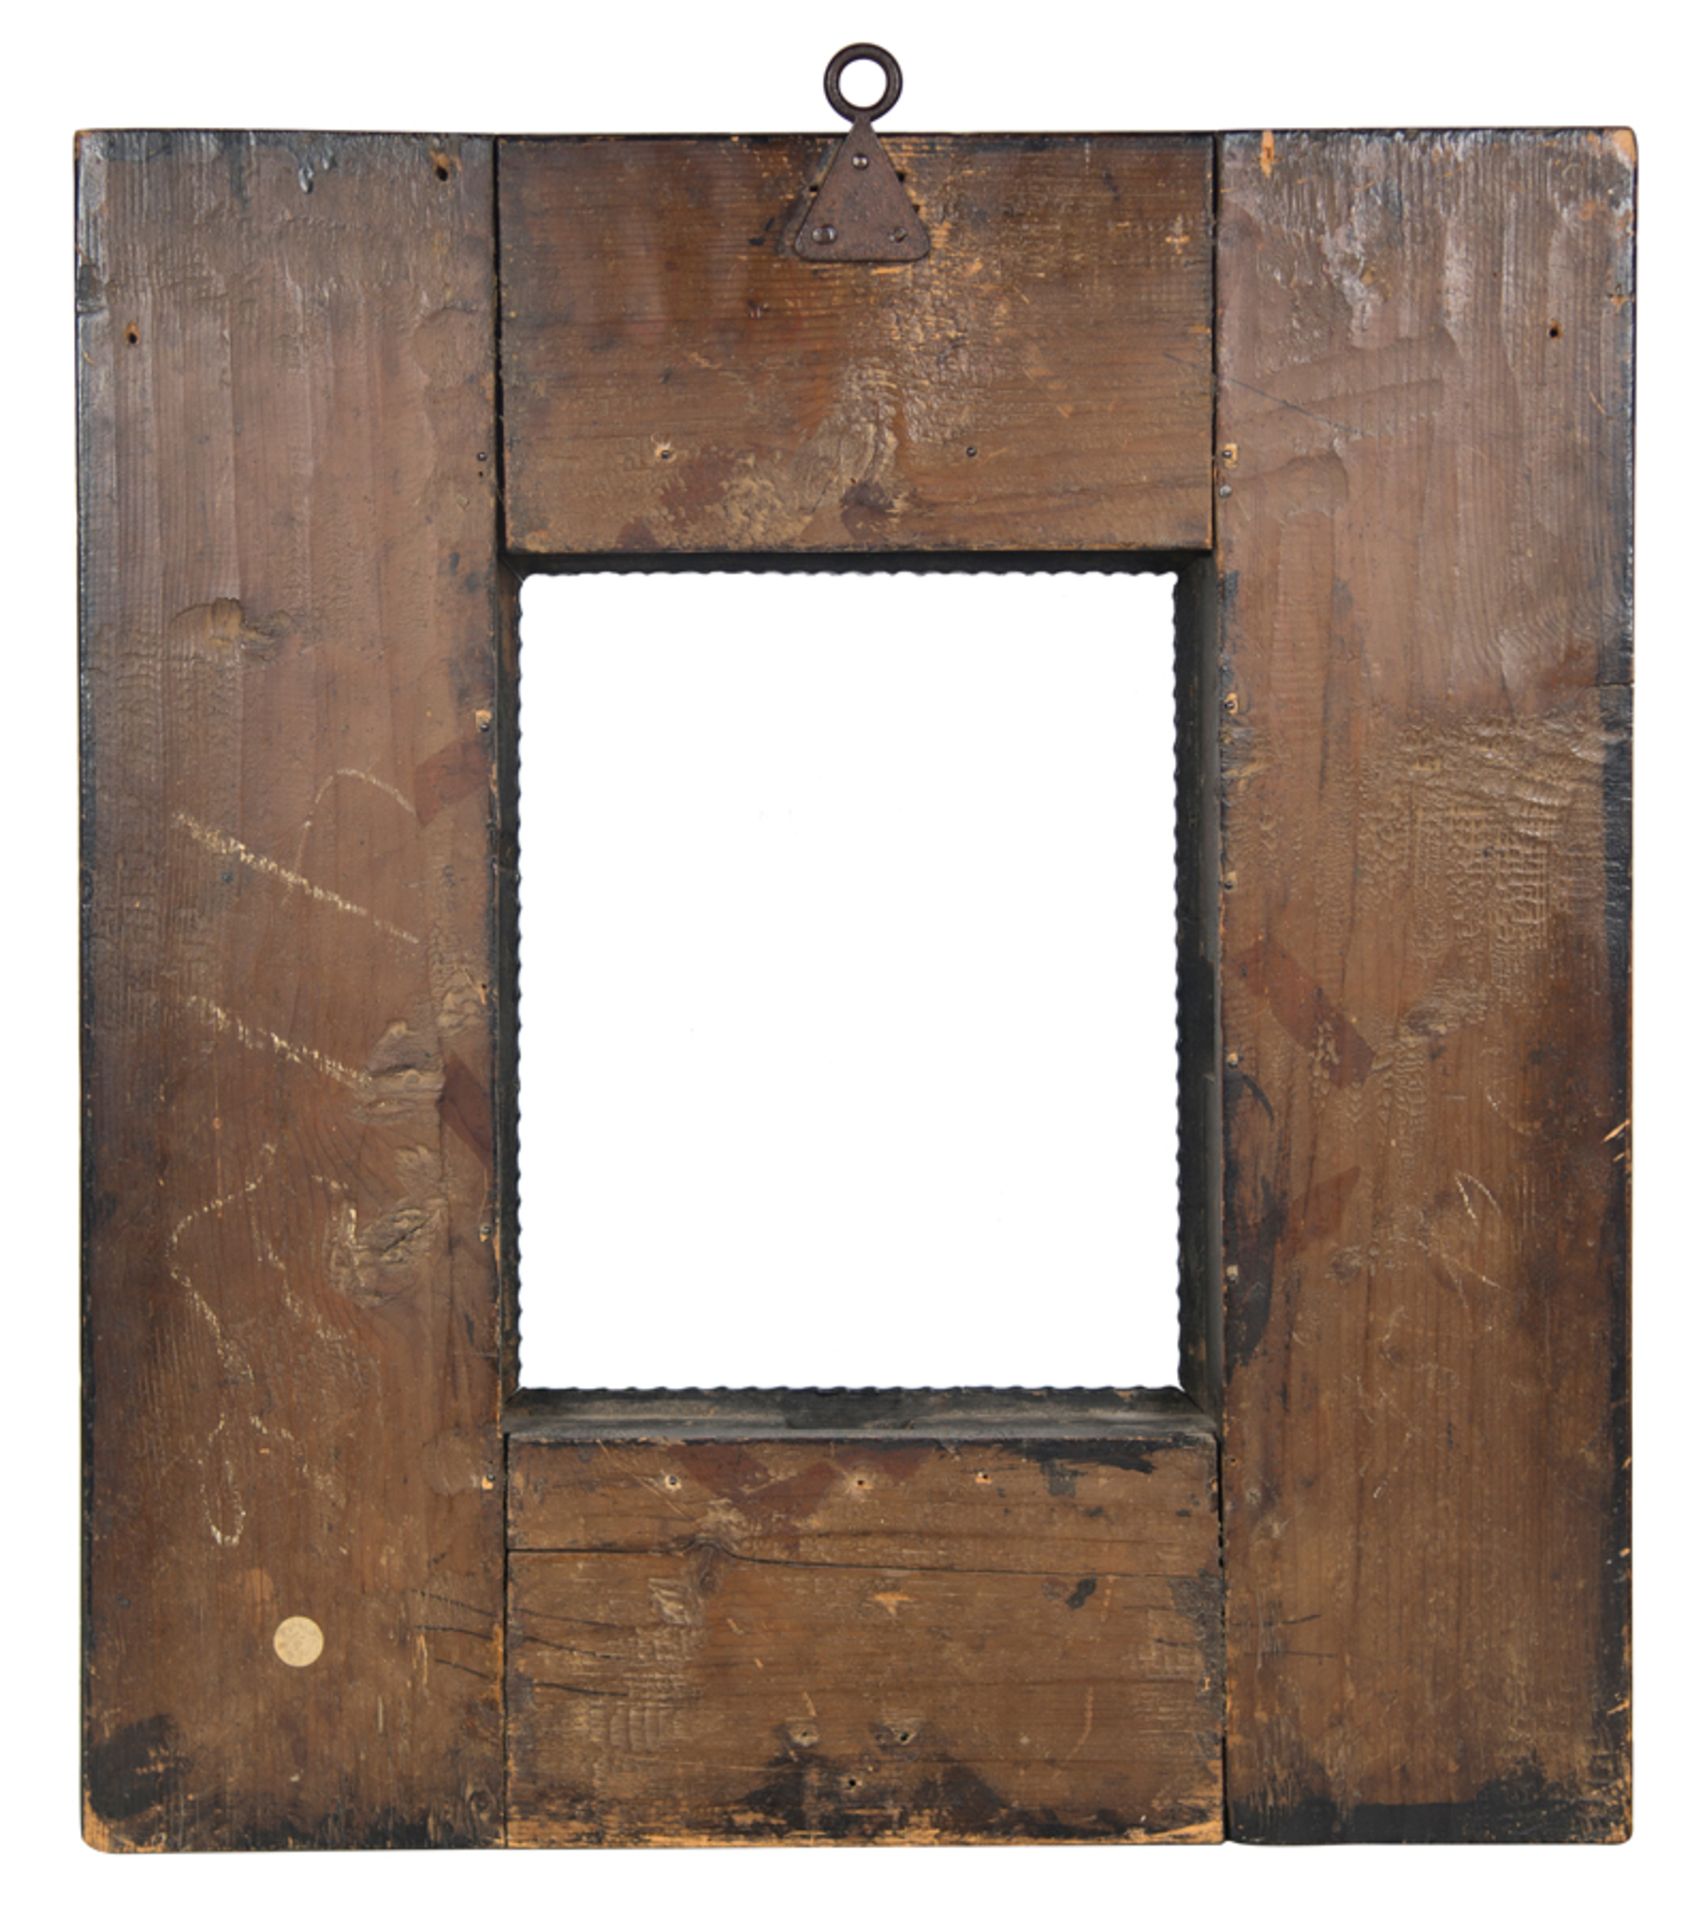 Carved ebony wooden frame. Netherlandish work. 17th- 18th century. - Bild 3 aus 3